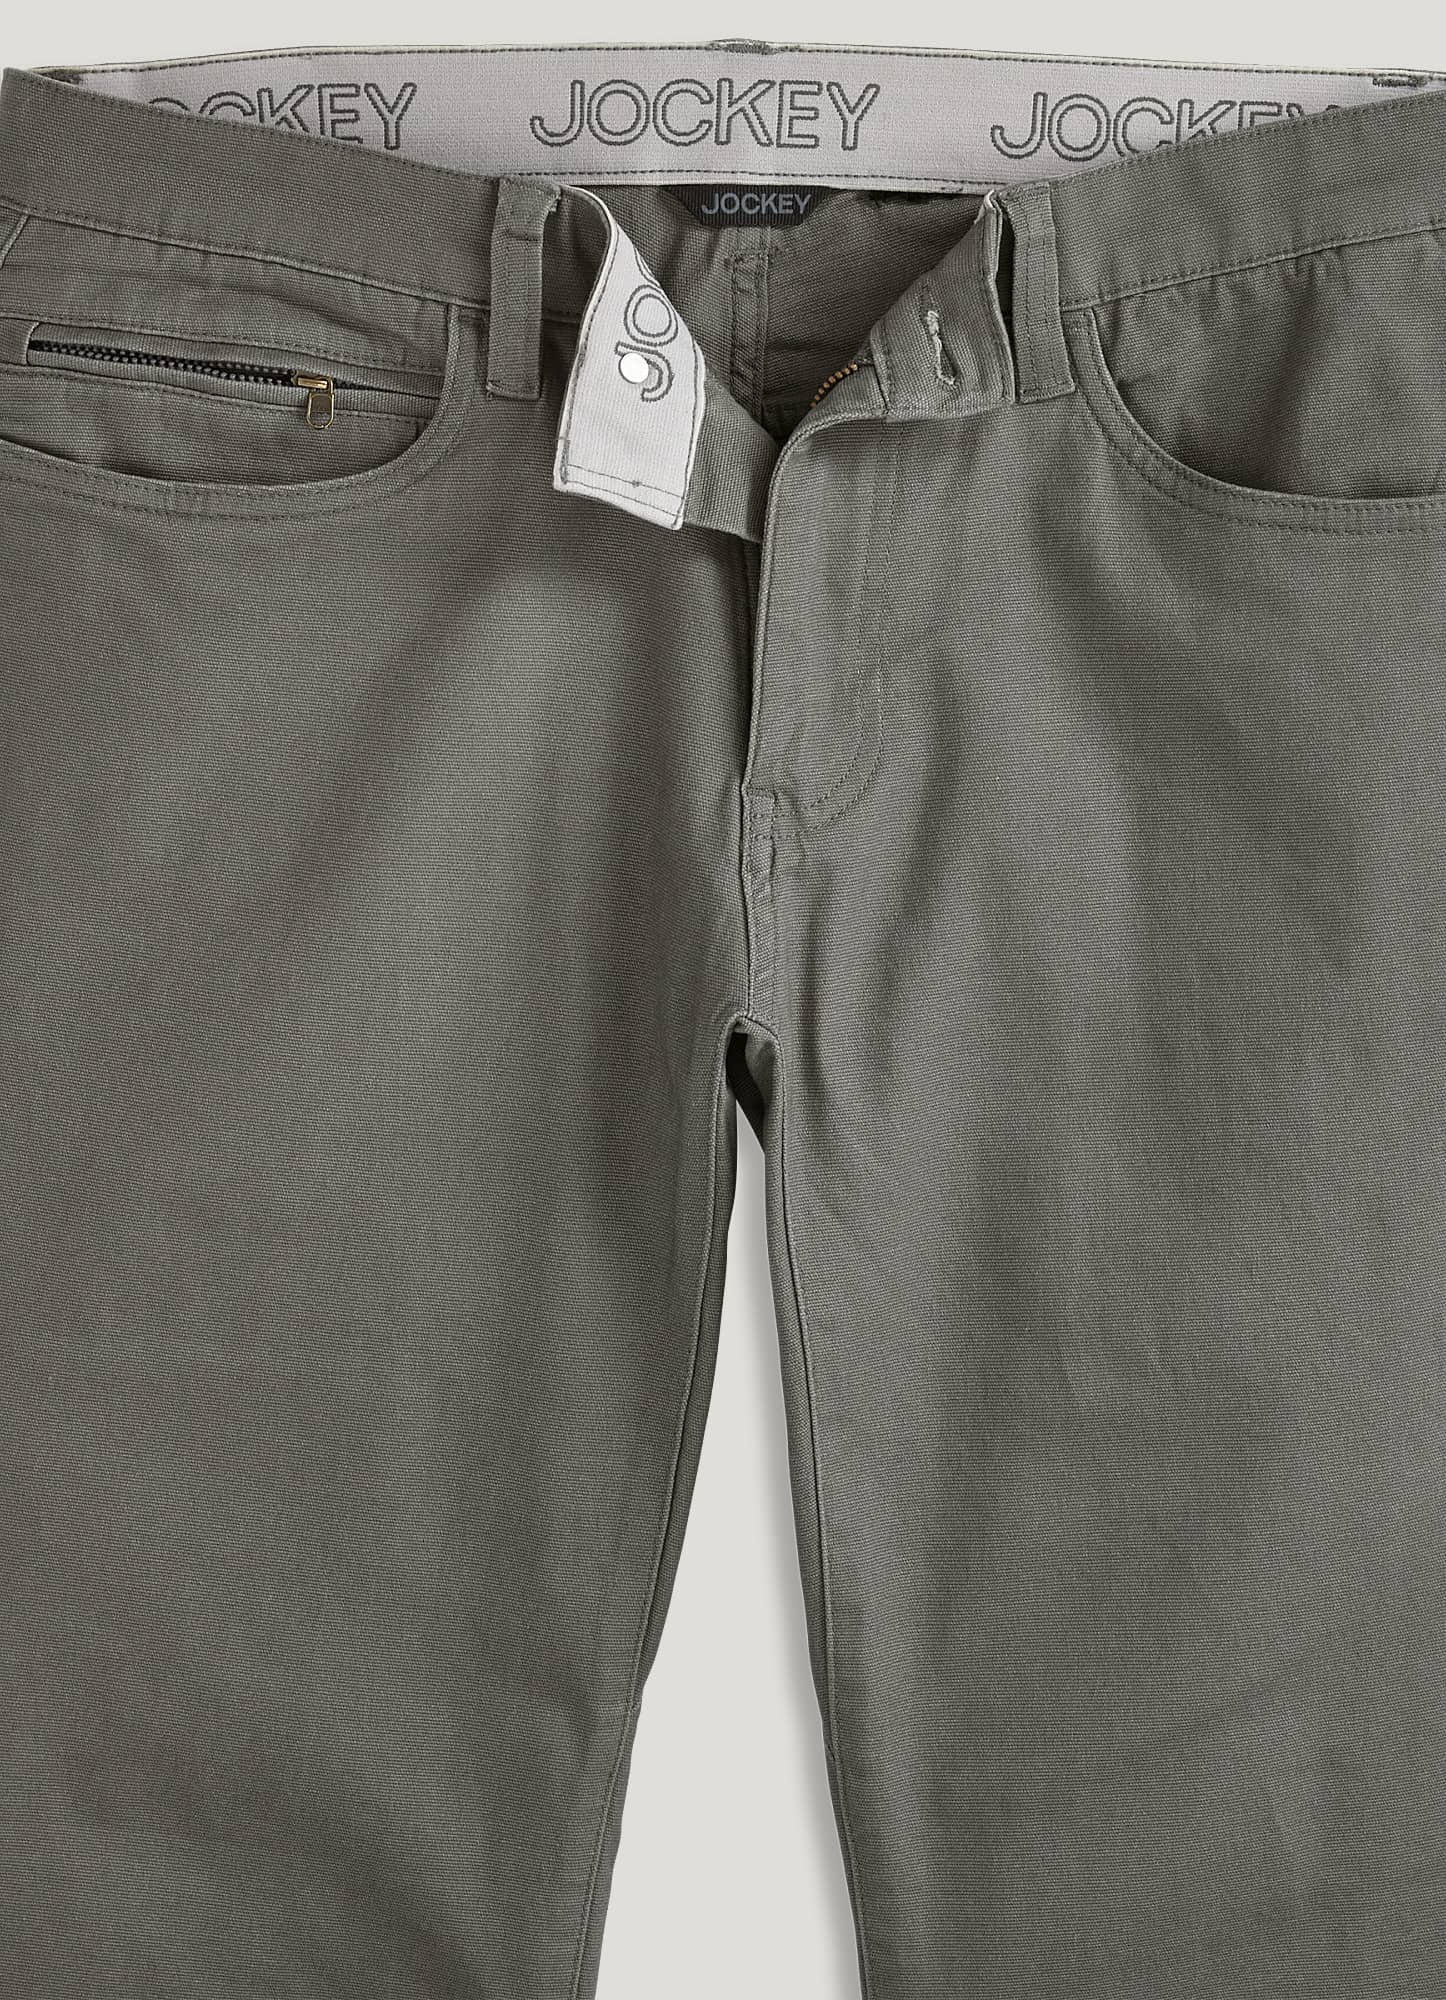 LA'eNviE Cotton Black & Grey Winter Lower Trousers for Men  Stylish/Running/Jogger/Sports Pants (